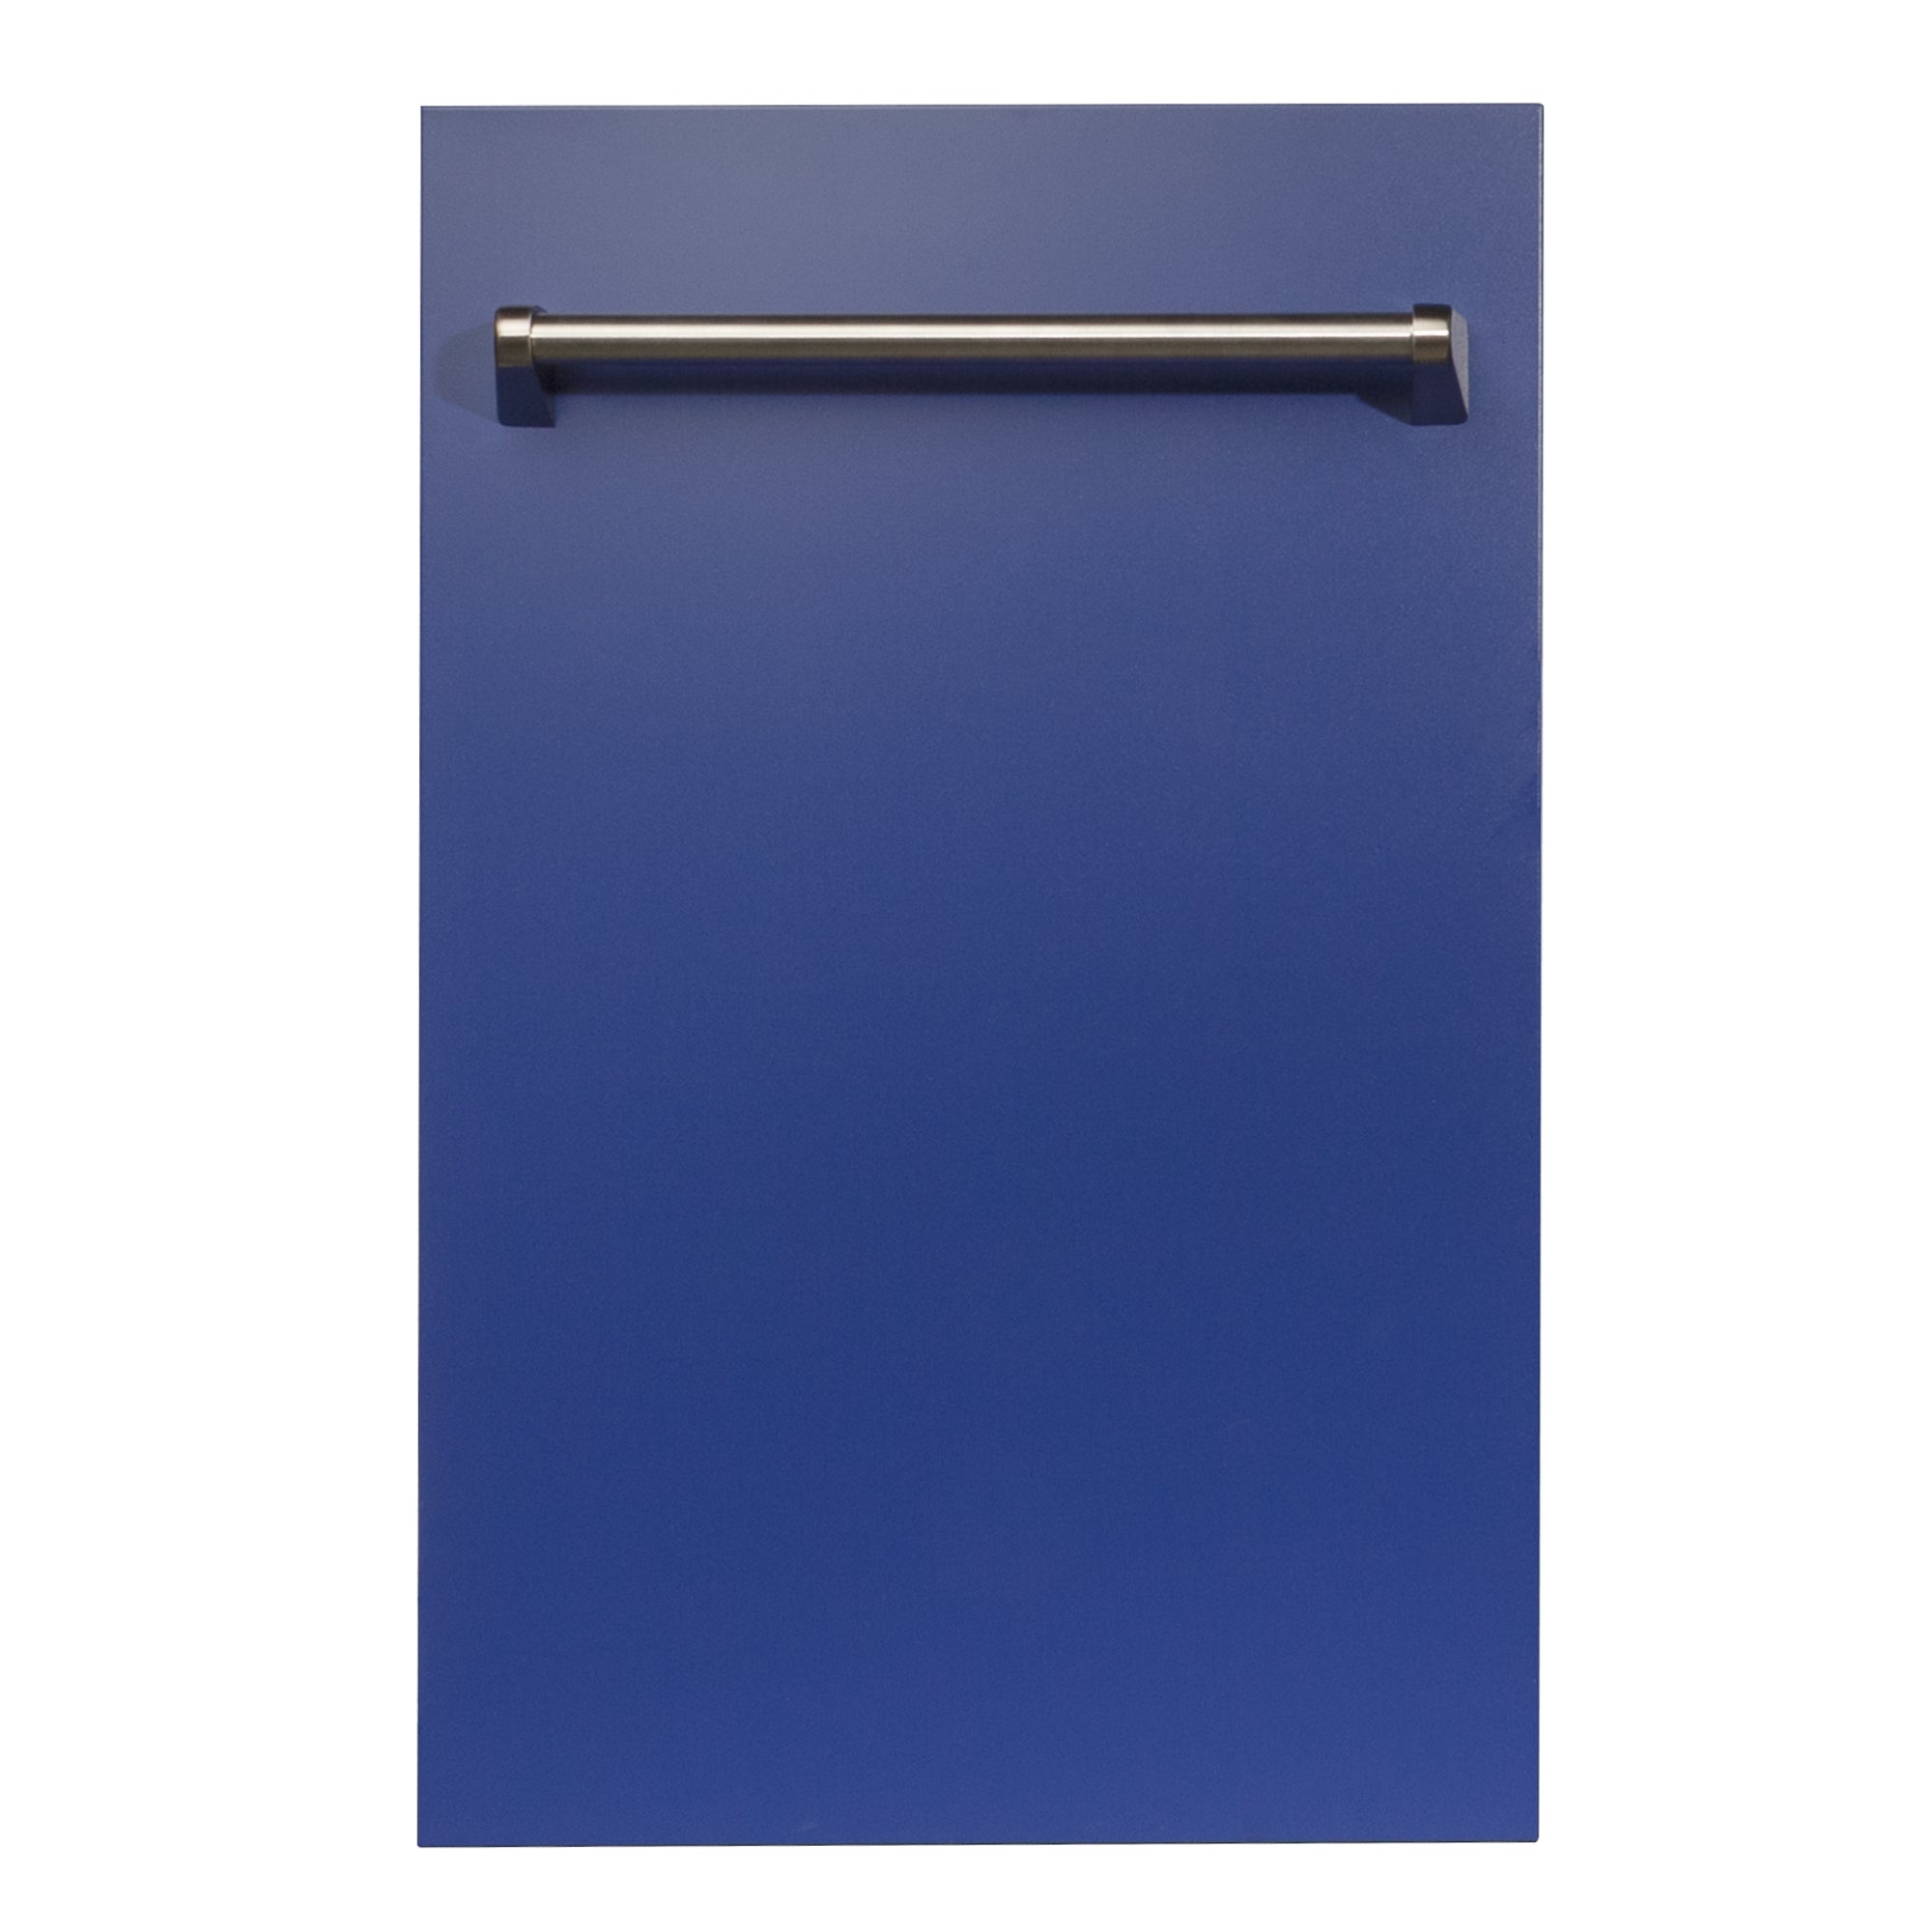 ZLINE 18" Dishwasher Panel in Blue Matte with Traditional Handle (DP-BM-18)